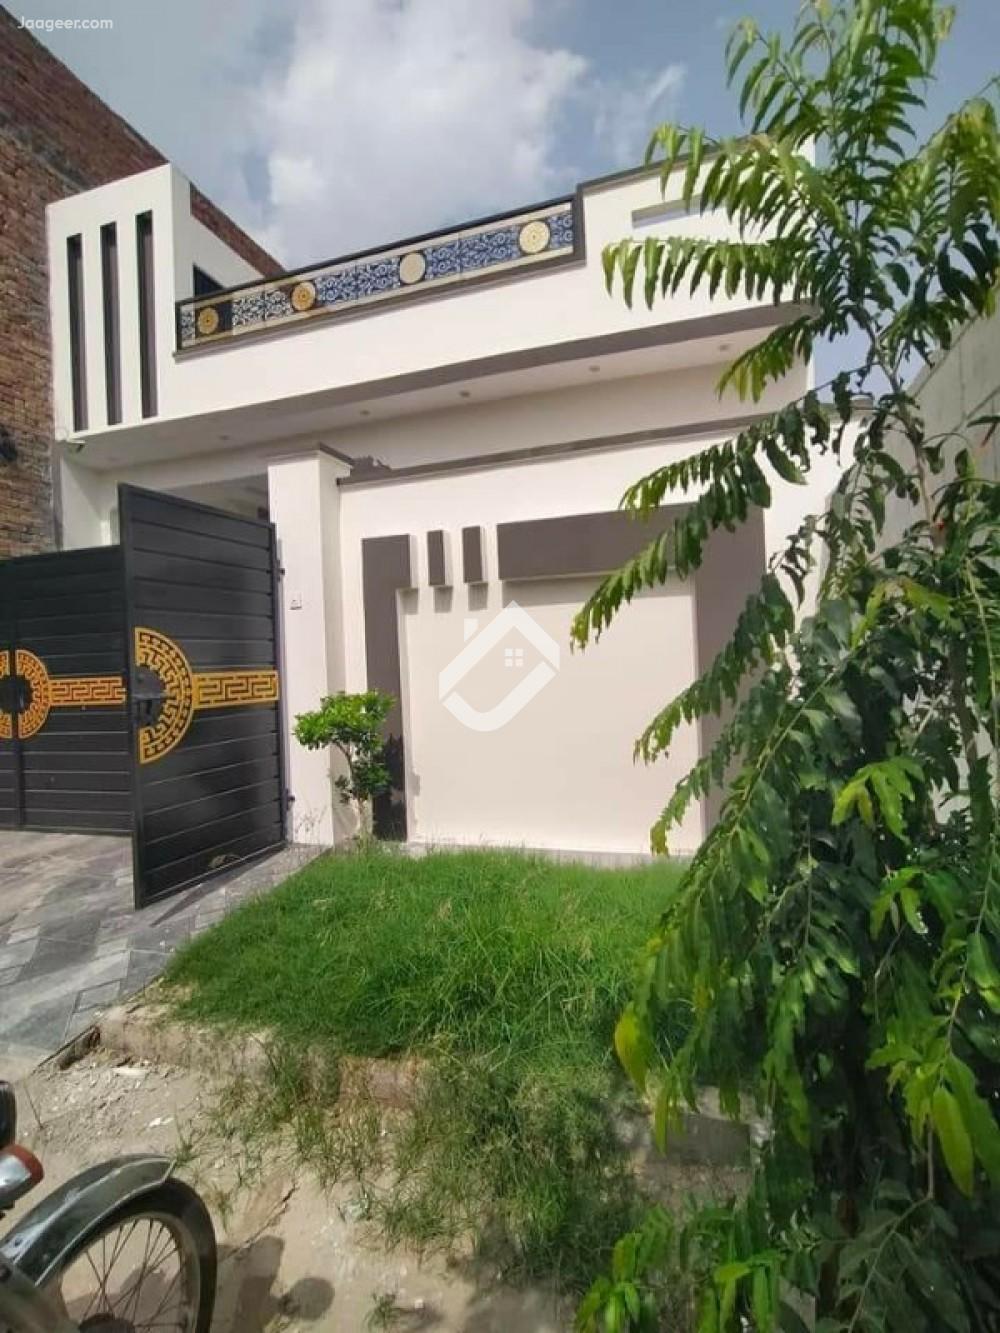 Main image 5 Marla Double Storey House For Sale At MA Jinnah Road Bukhari Villa Bukhari Villa